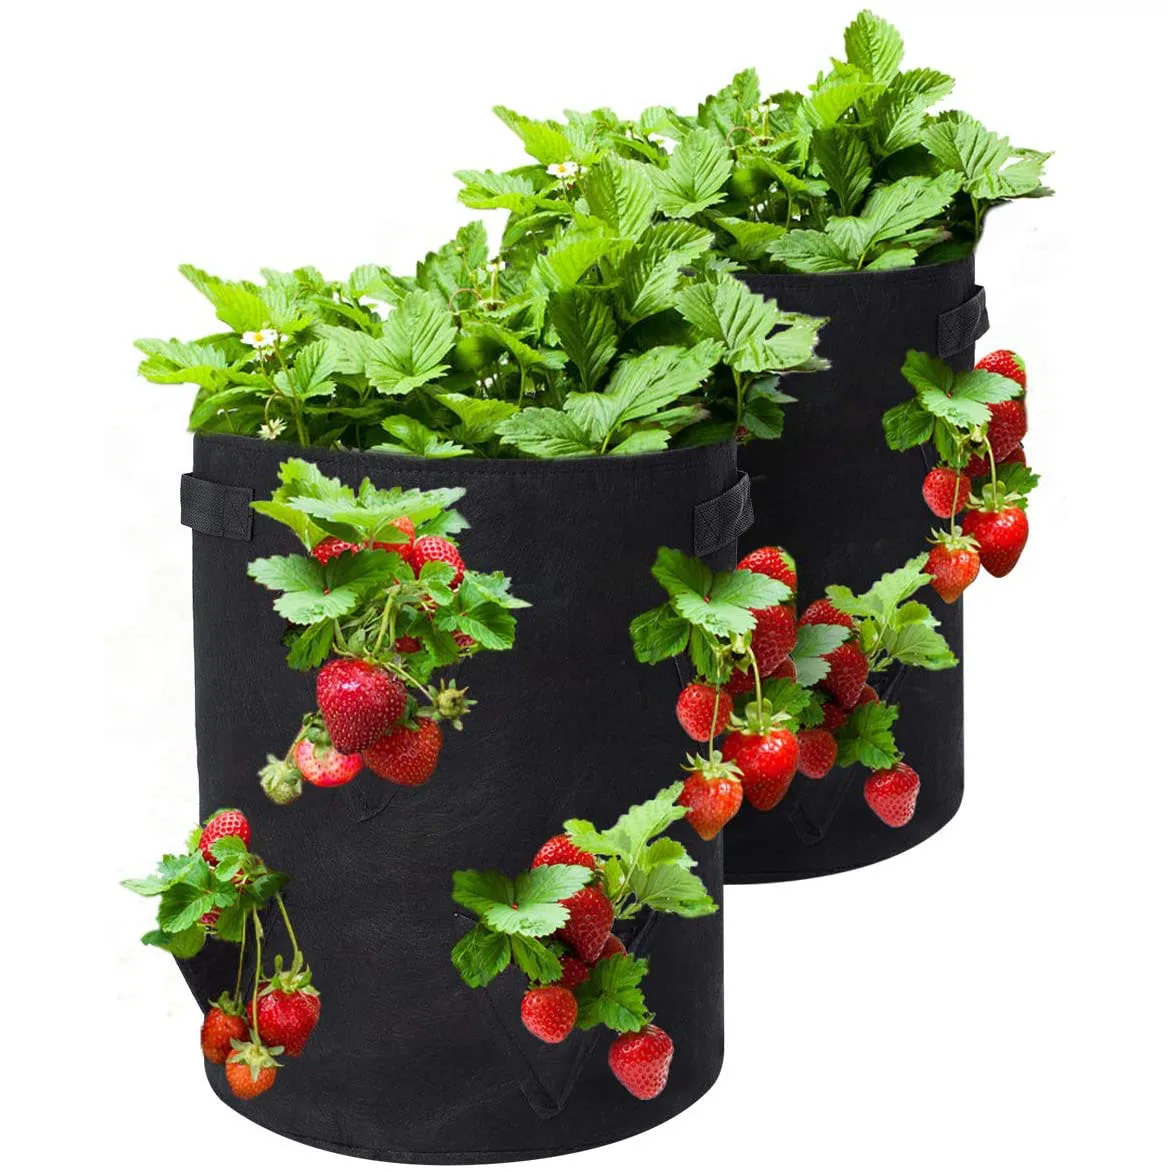 

TGB-A016B Benefit natural material Garden Planting Bag Grow Felt Fabric Planter Bag Strawberry, Customized